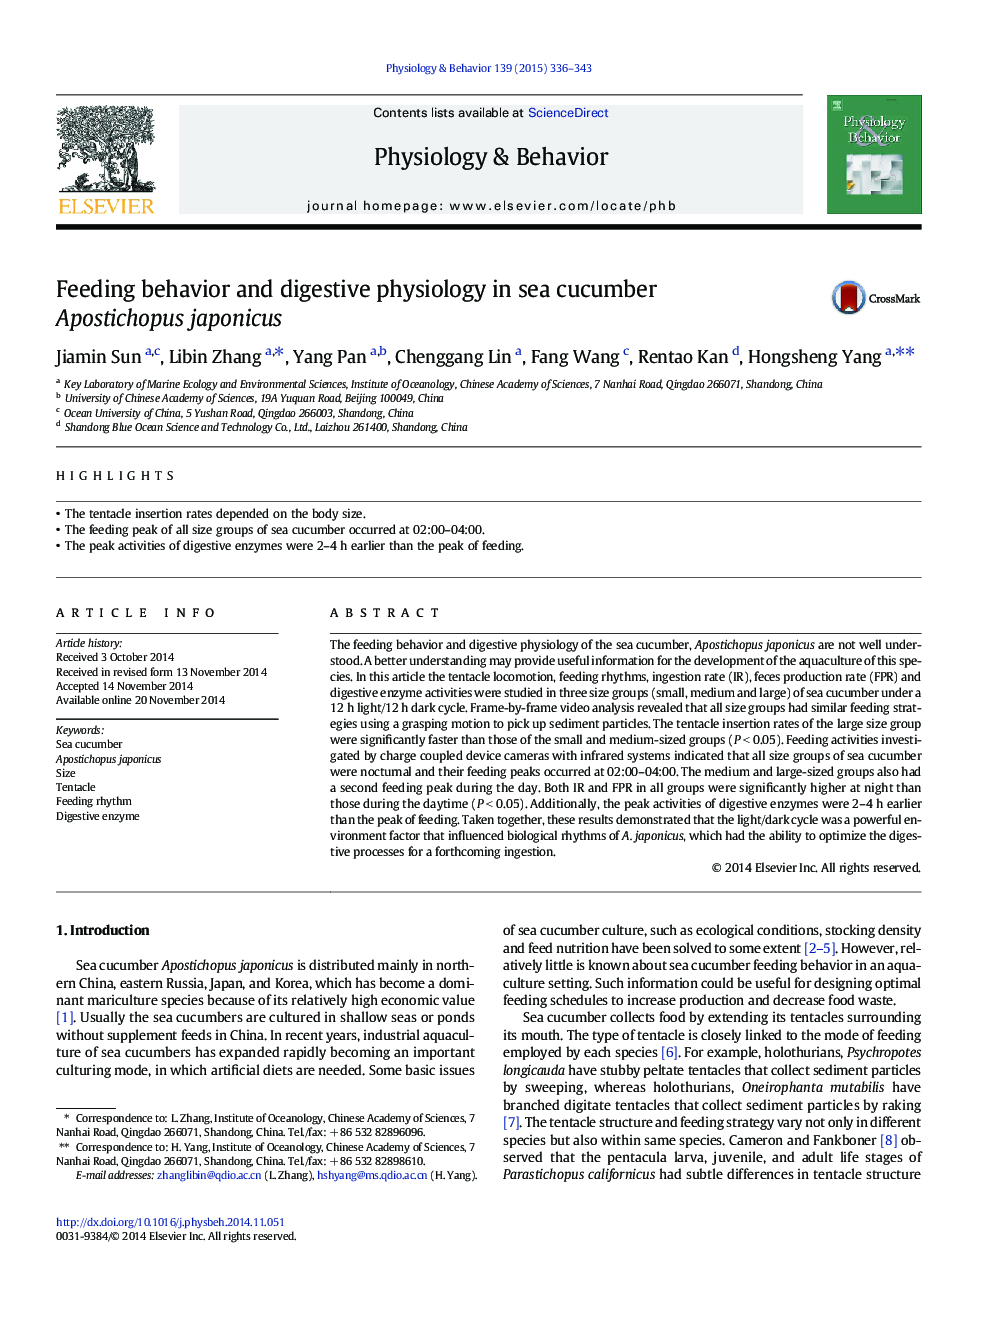 Feeding behavior and digestive physiology in sea cucumber Apostichopus japonicus